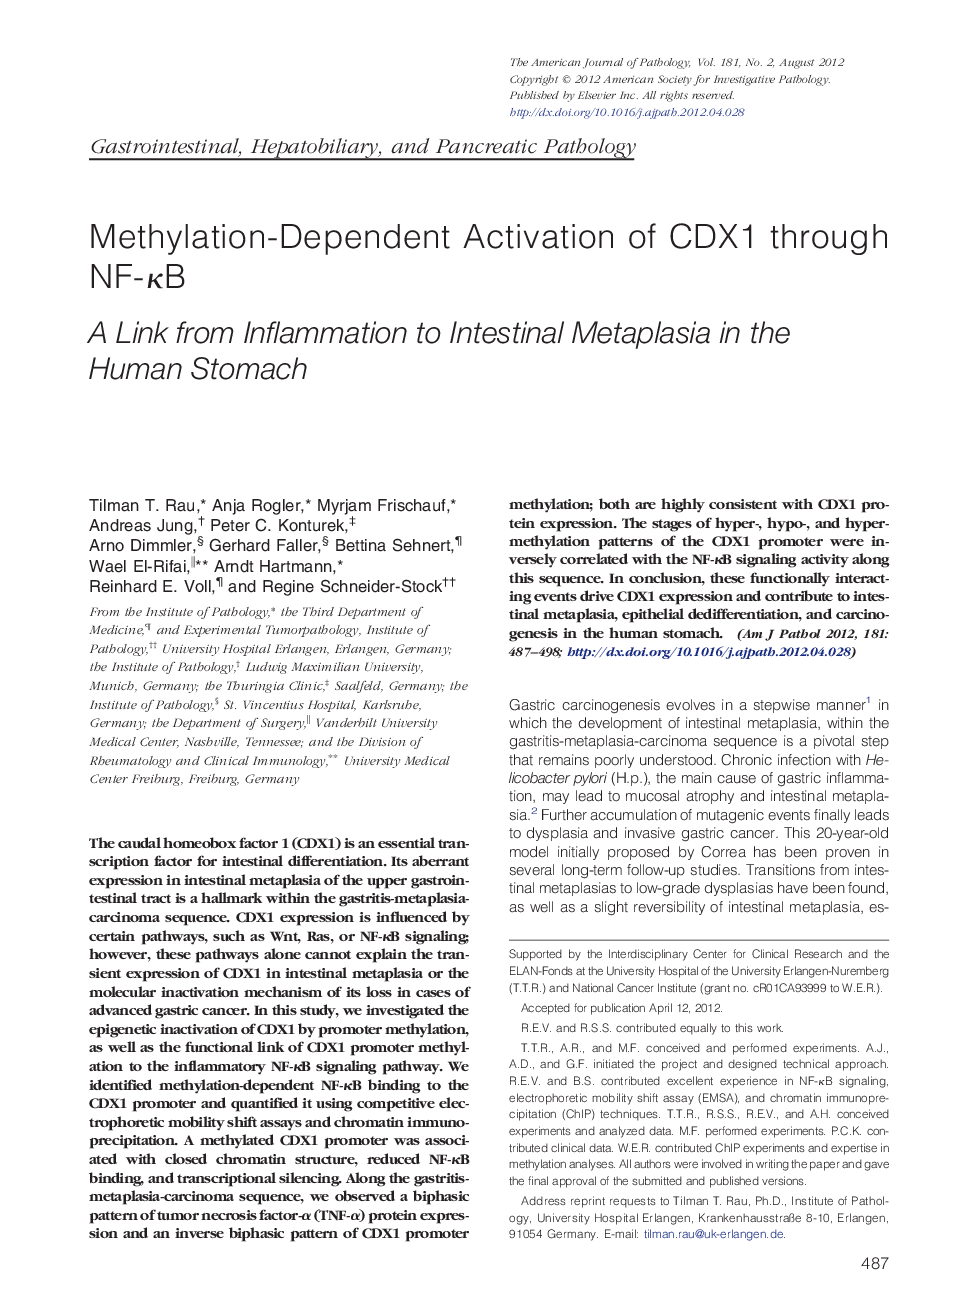 Methylation-Dependent Activation of CDX1 through NF-ÎºB